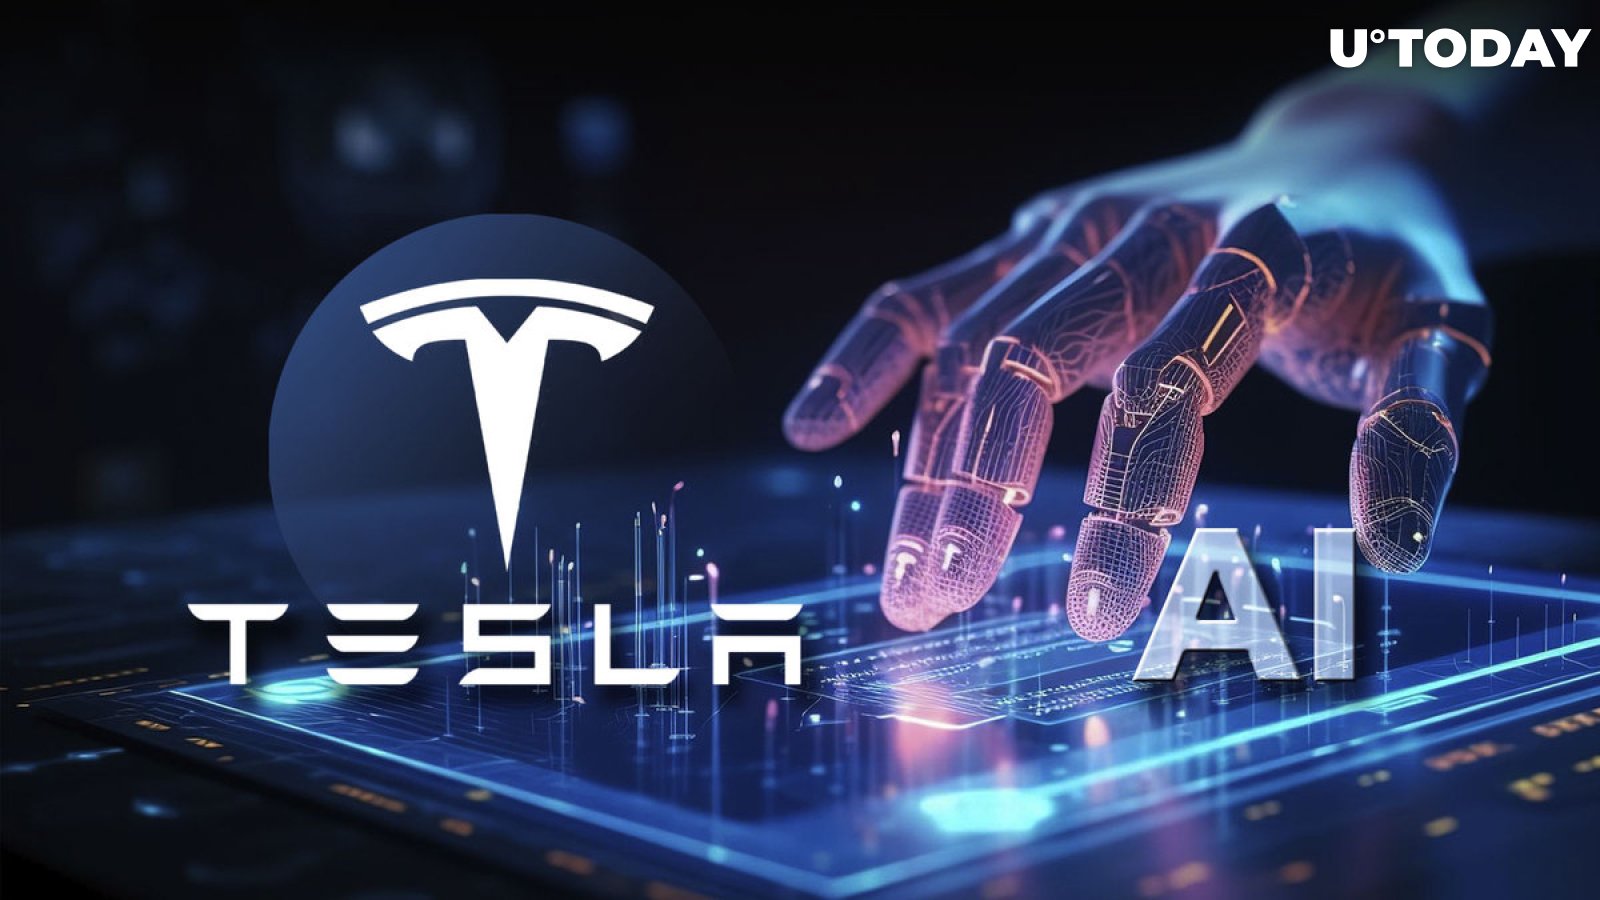 Elon Musk's Tesla to Spend $10 Billion on AI Training This Year